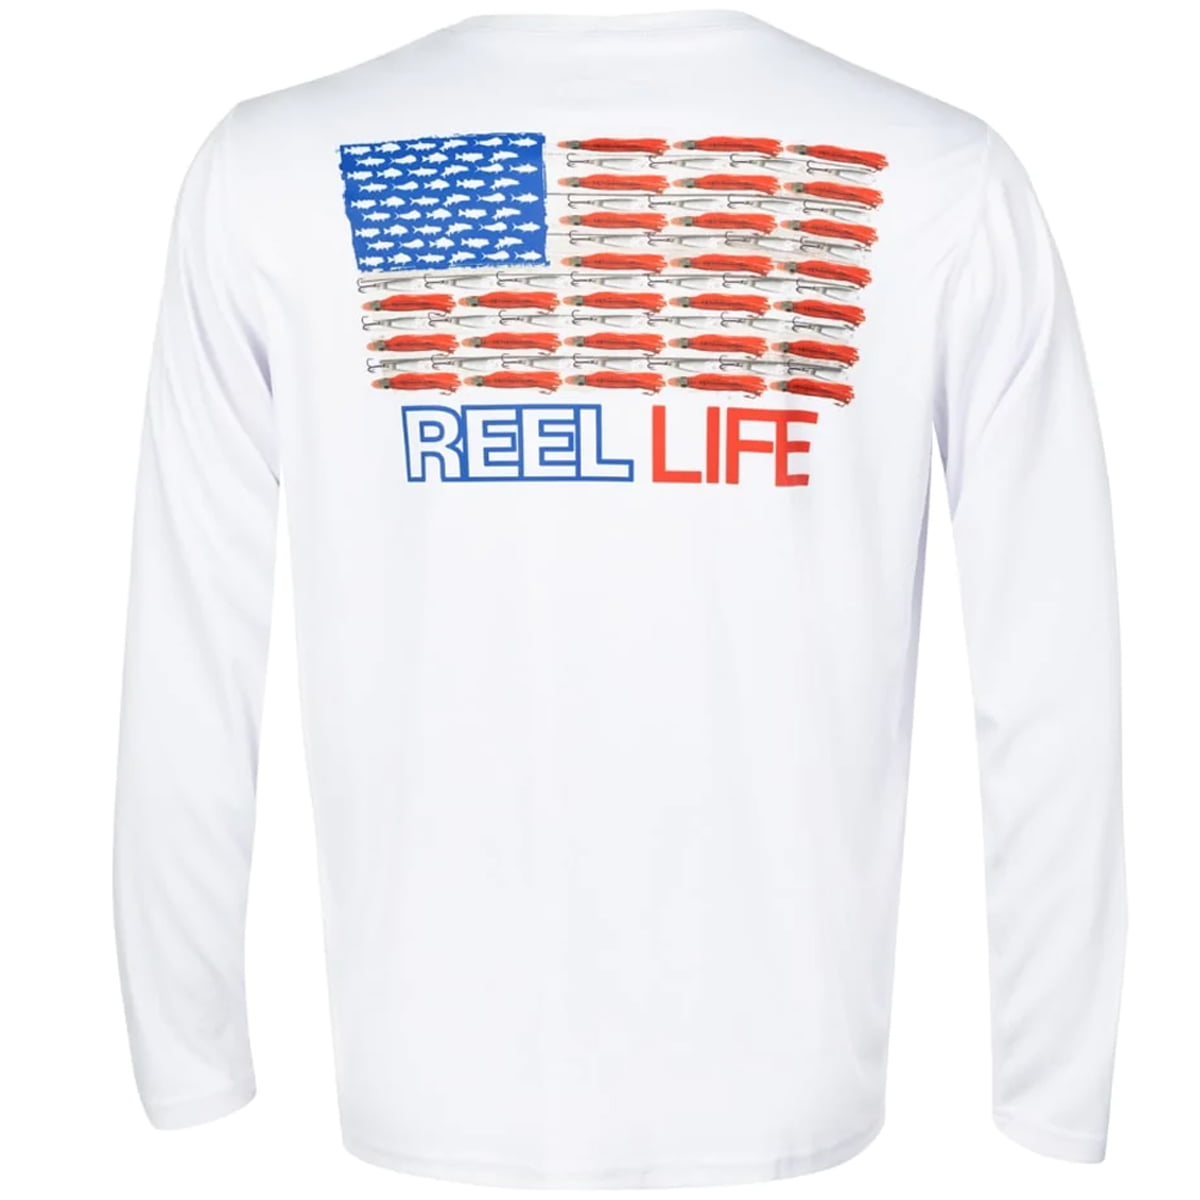 Reel Life Merica UV Long Sleeve Performance T-Shirt - Medium